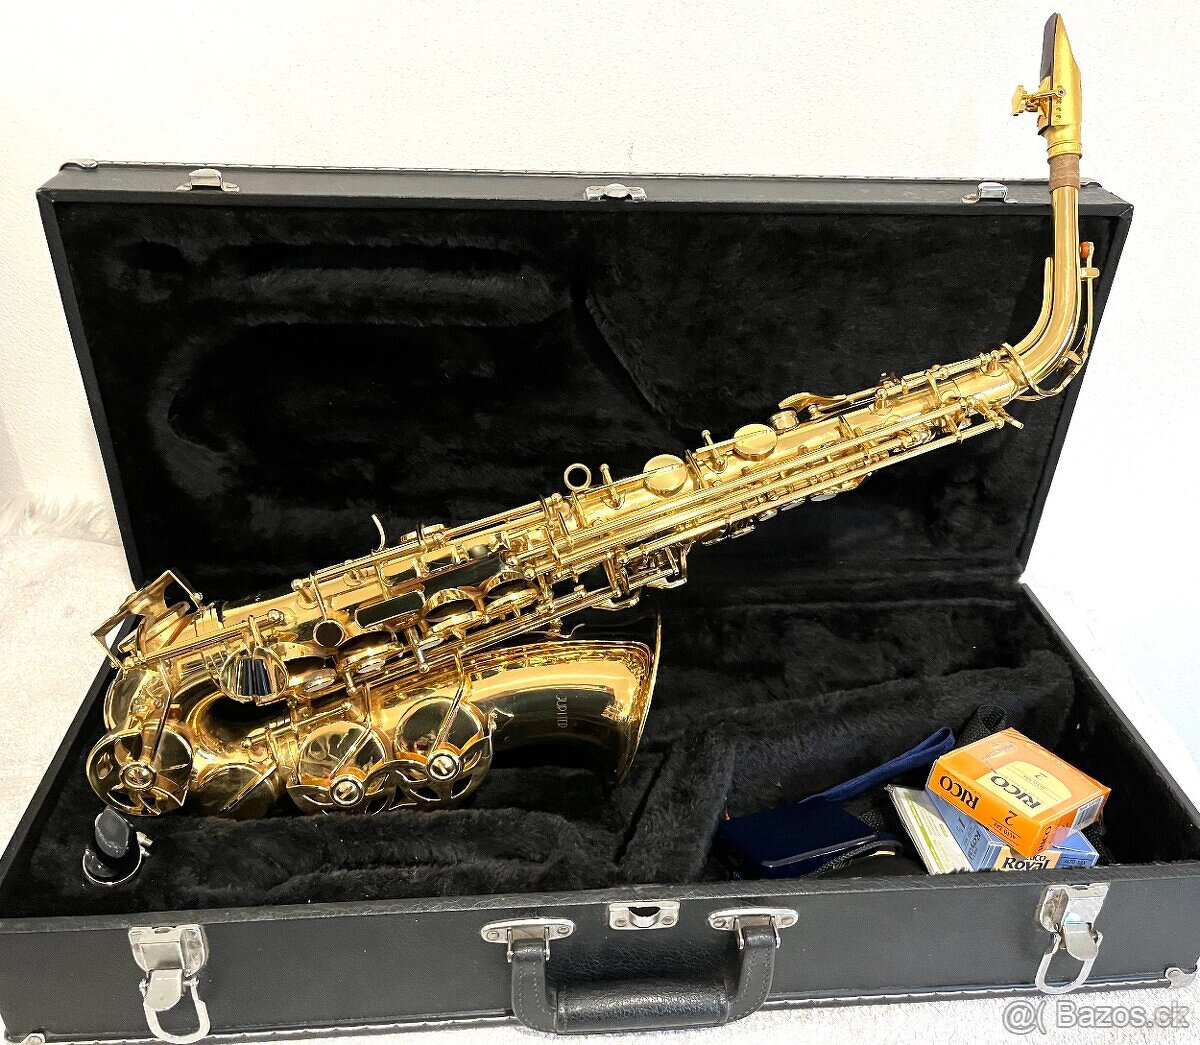 Predám Es Alt saxofón Jupiter JAS-567-565 - krásny zvuk